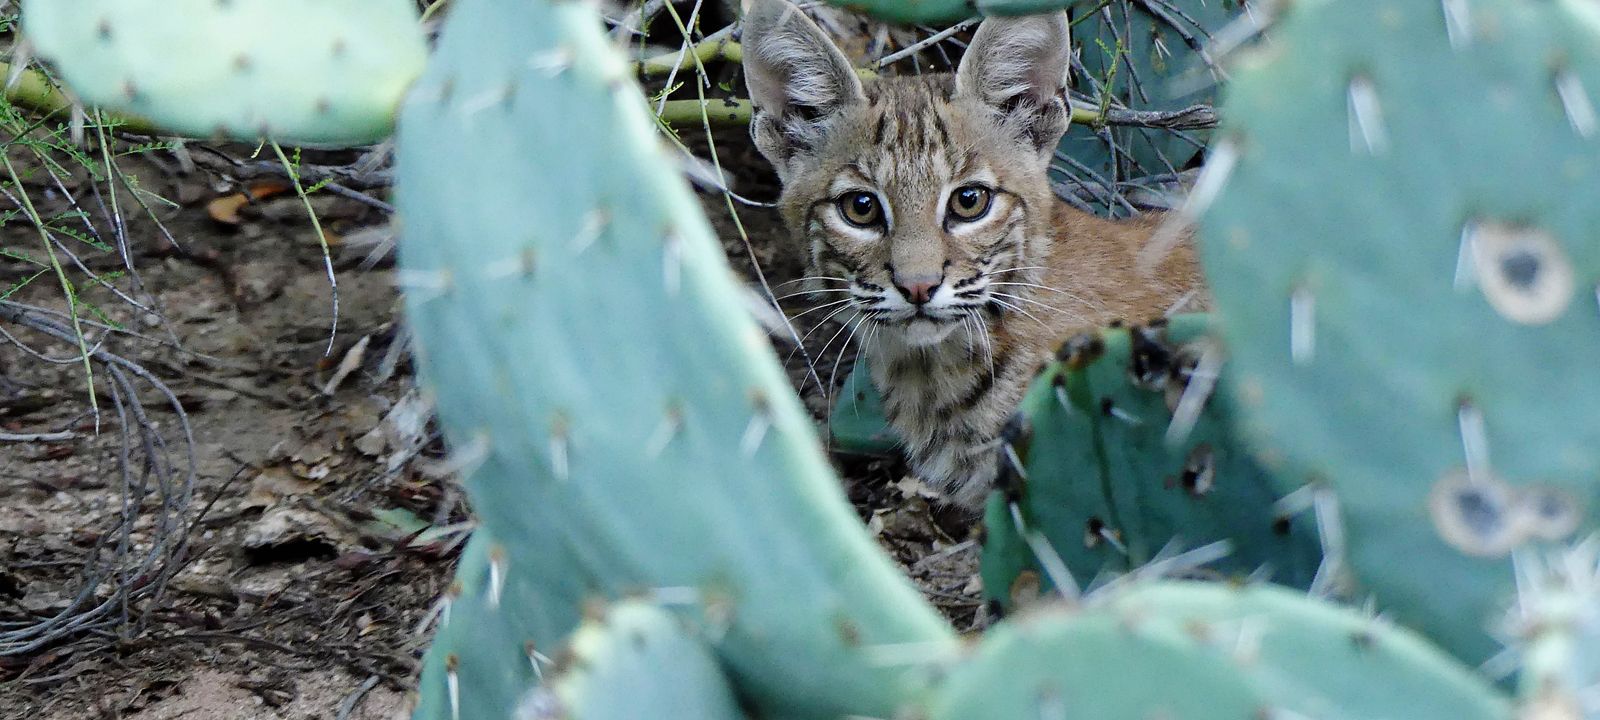 Wildlife rescue|wildlife sanctuary|Scottsdale Arizona